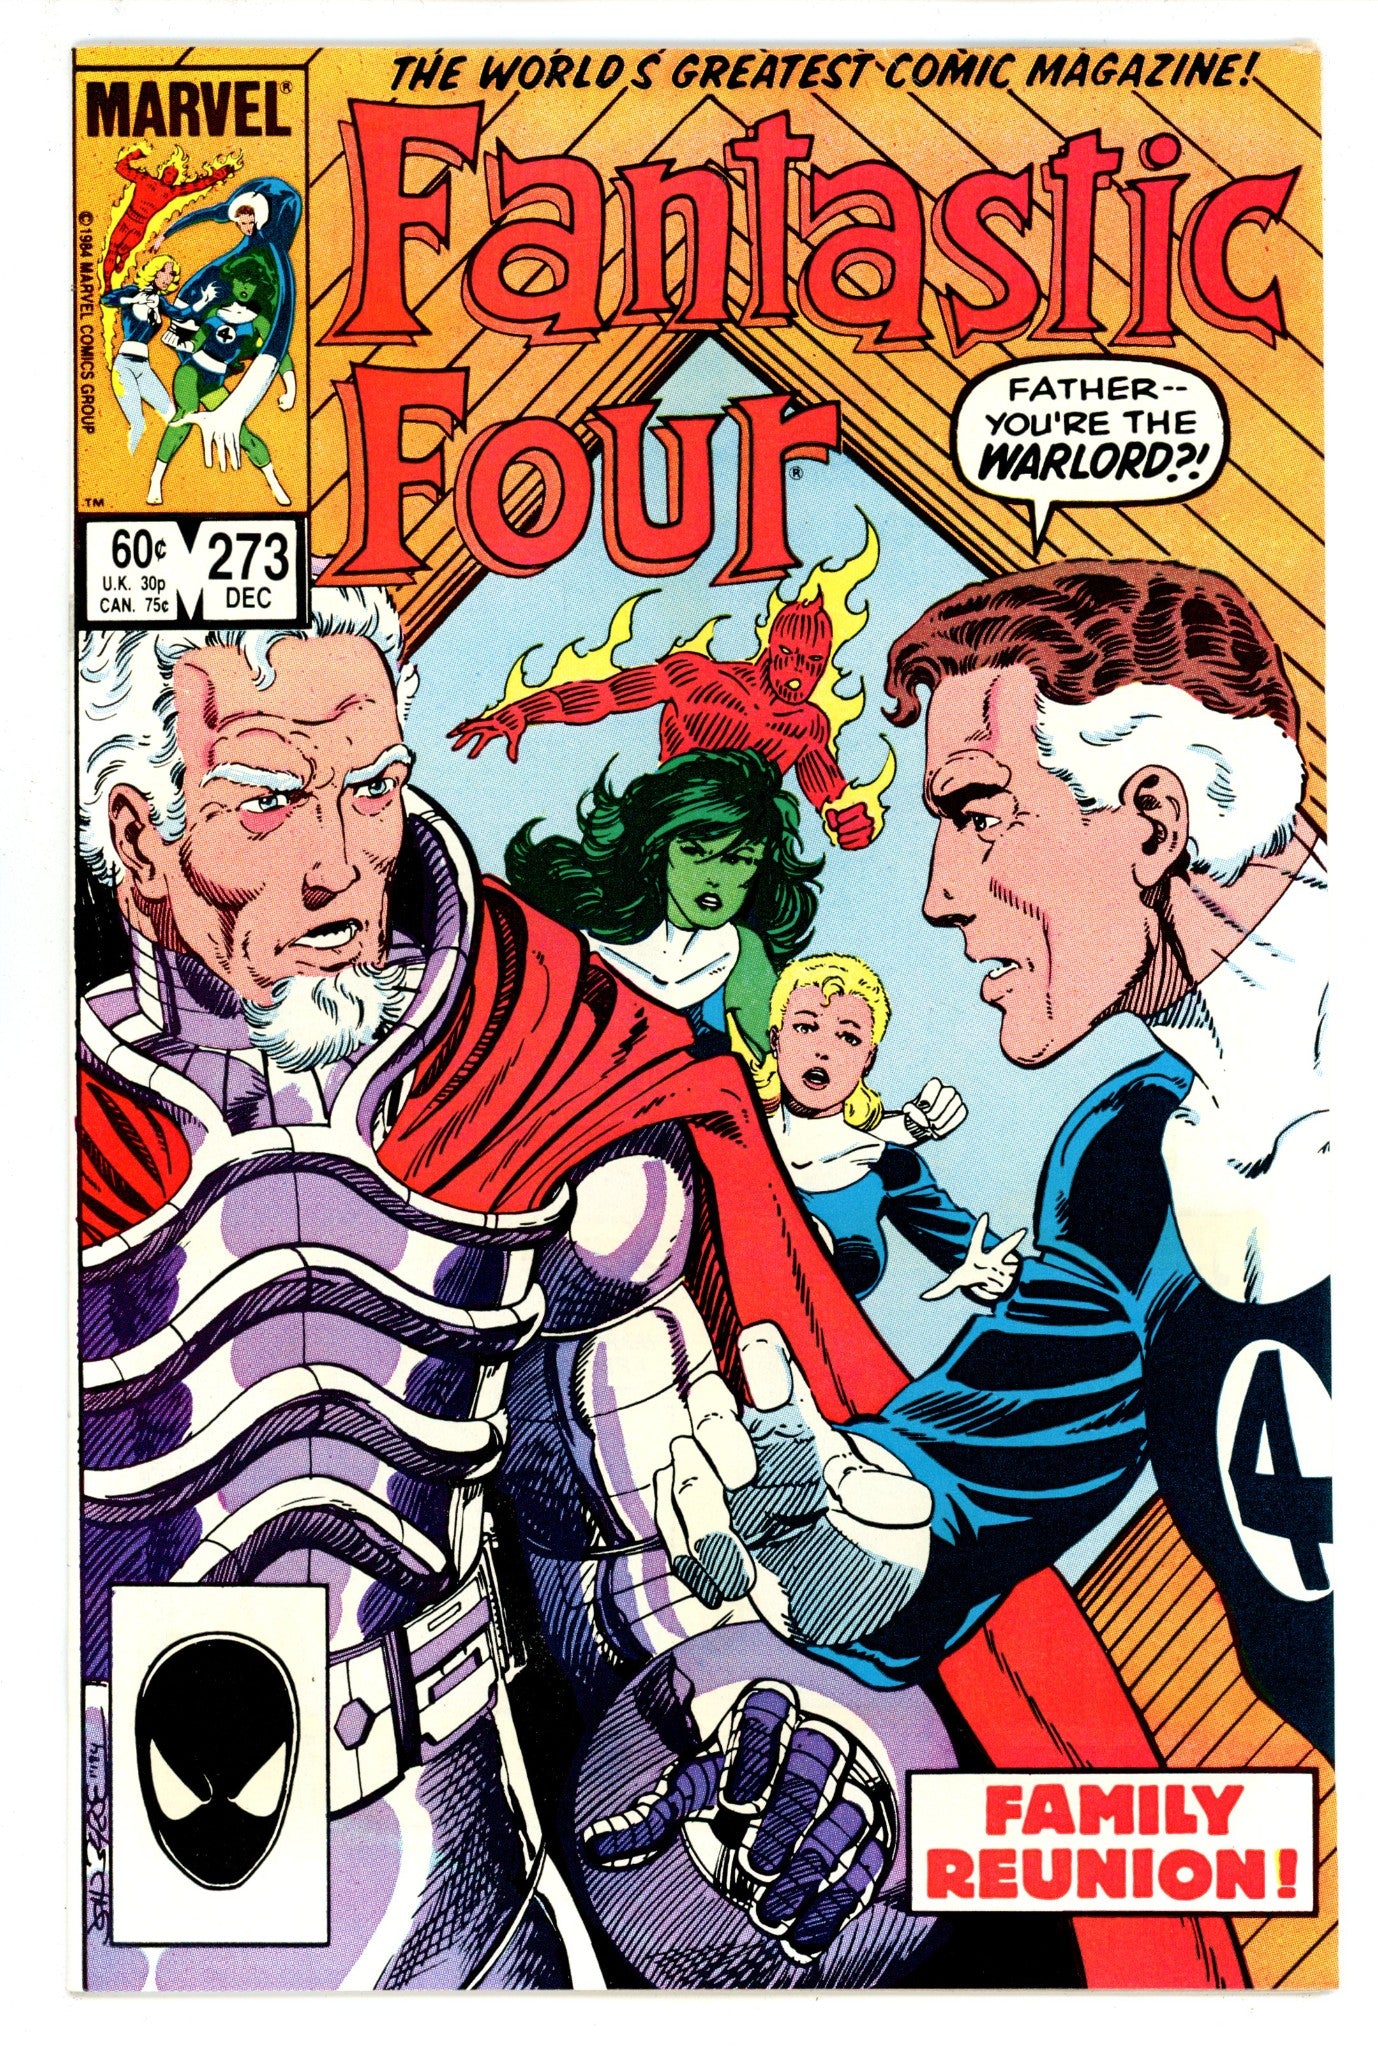 Fantastic Four Vol 1 273 NM- (9.2) (1984) 